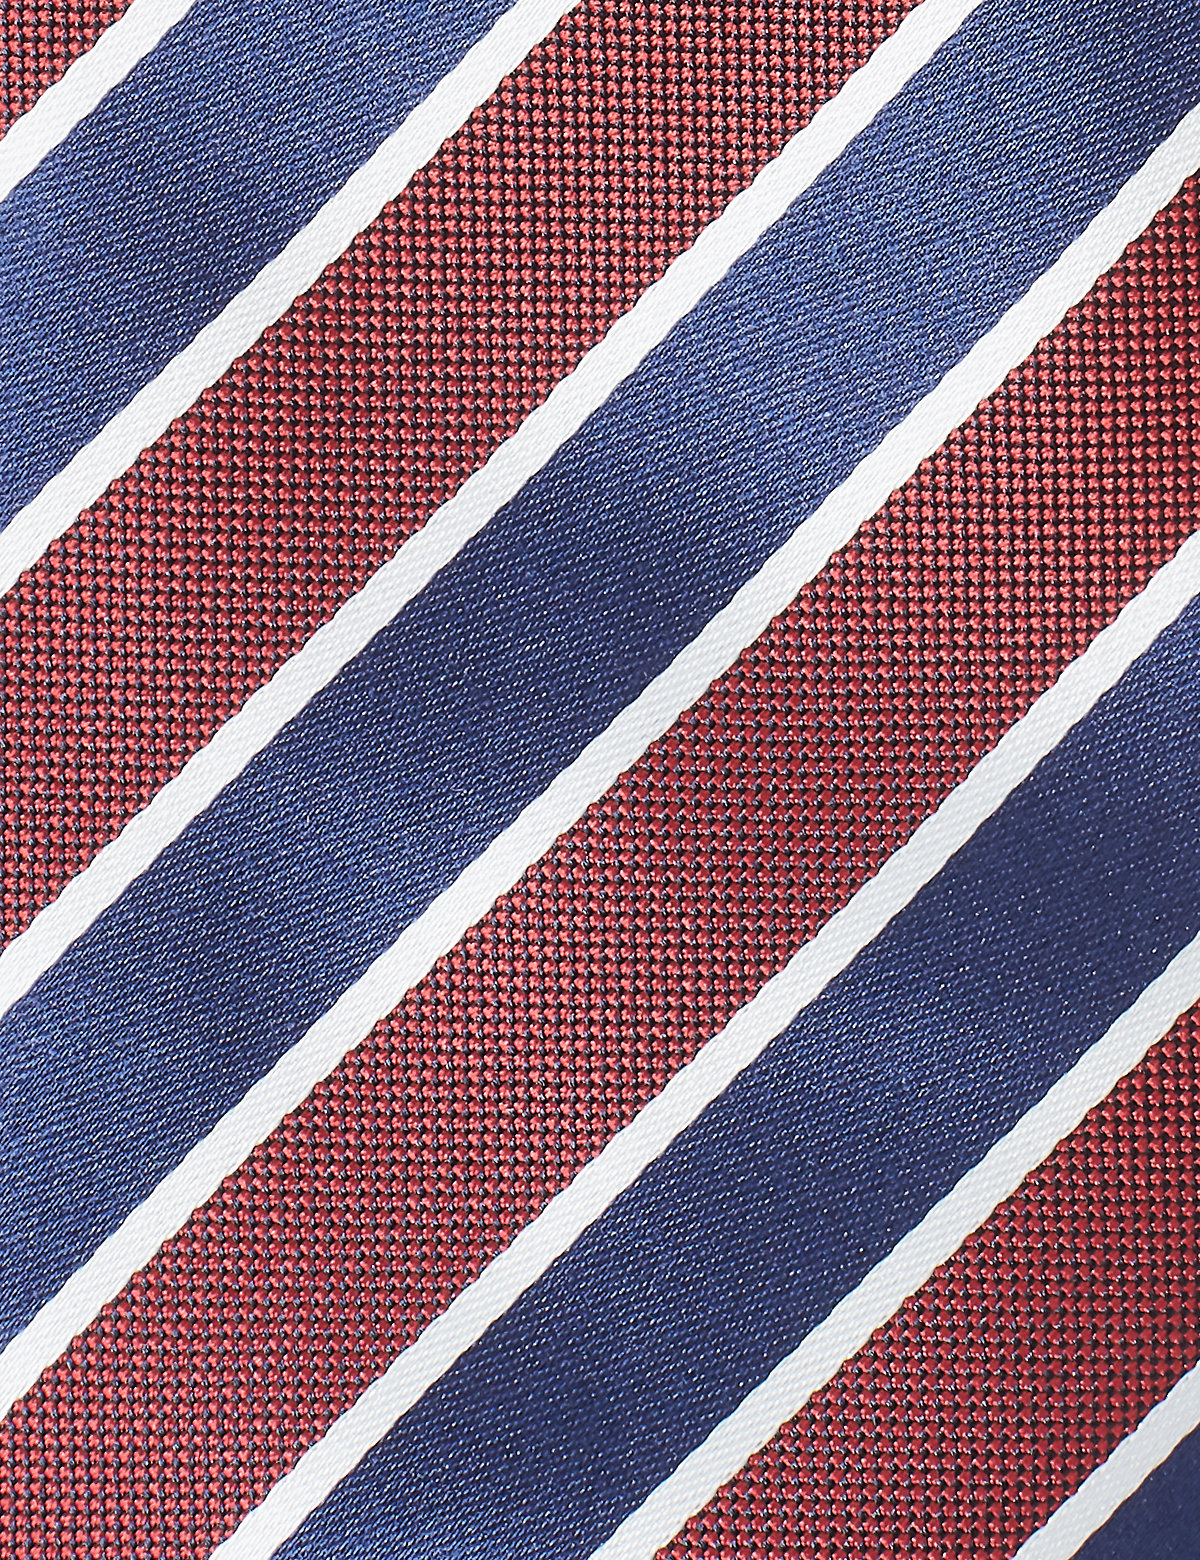 Striped Tie